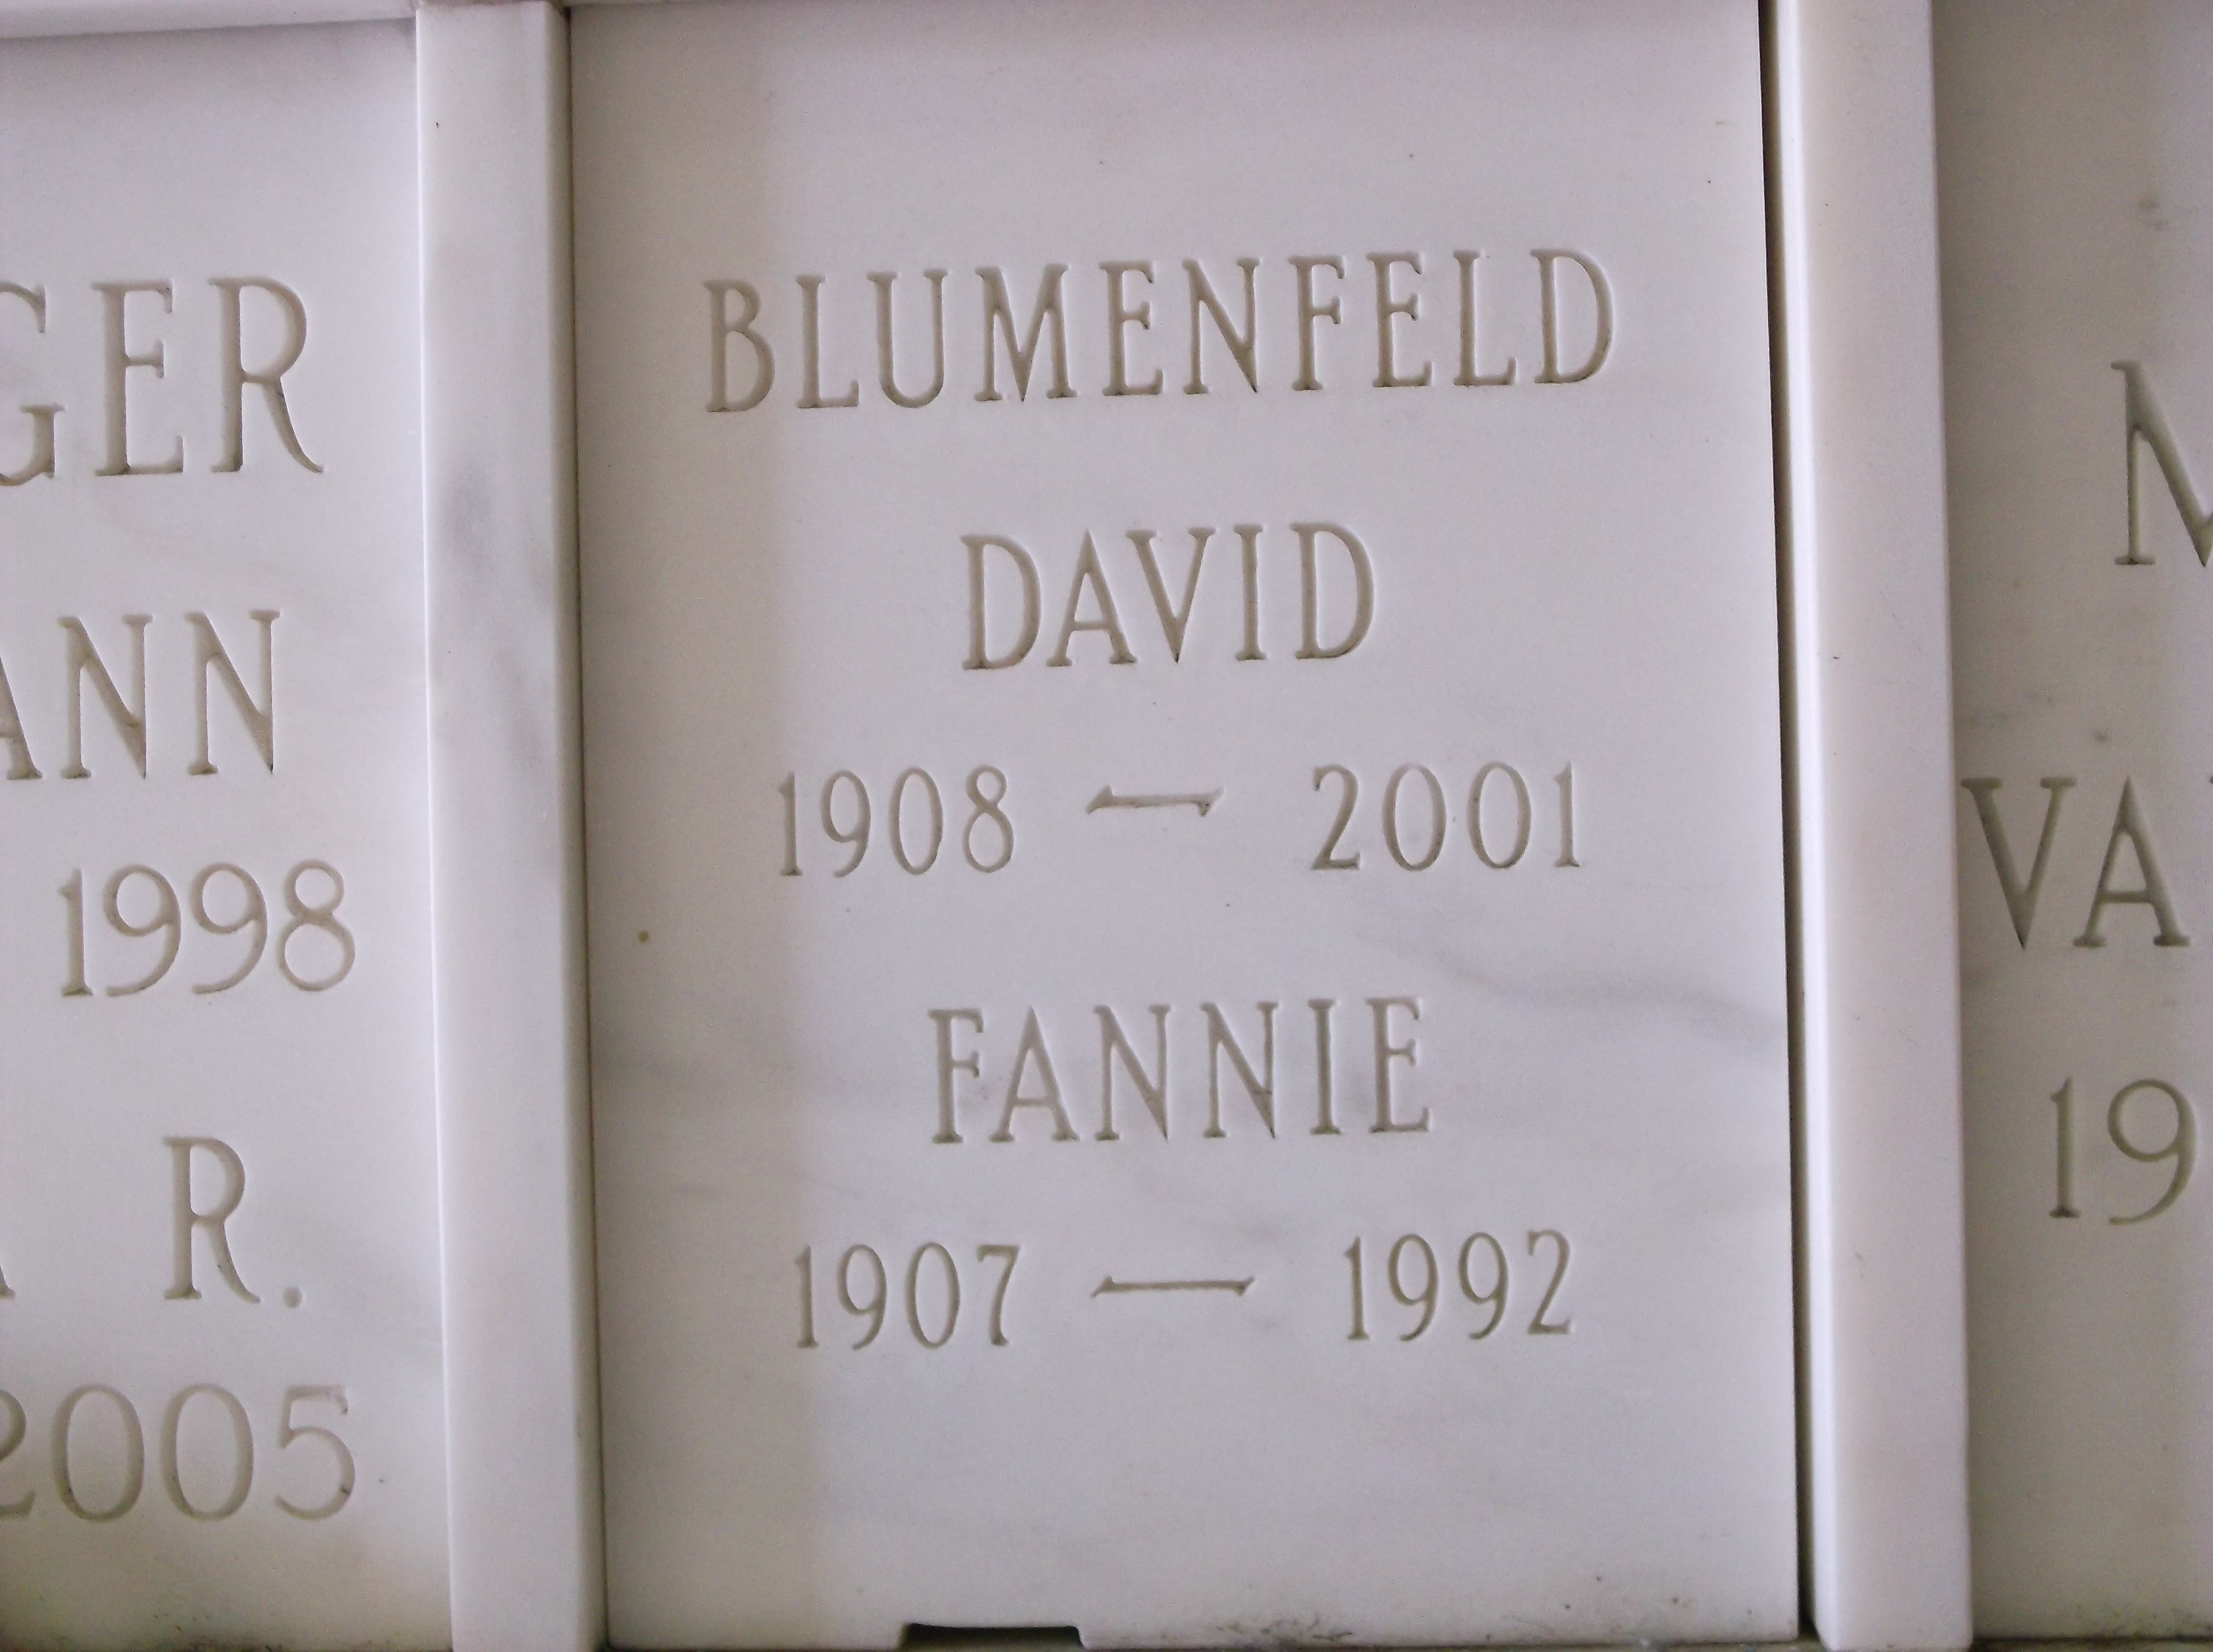 David Blumenfeld